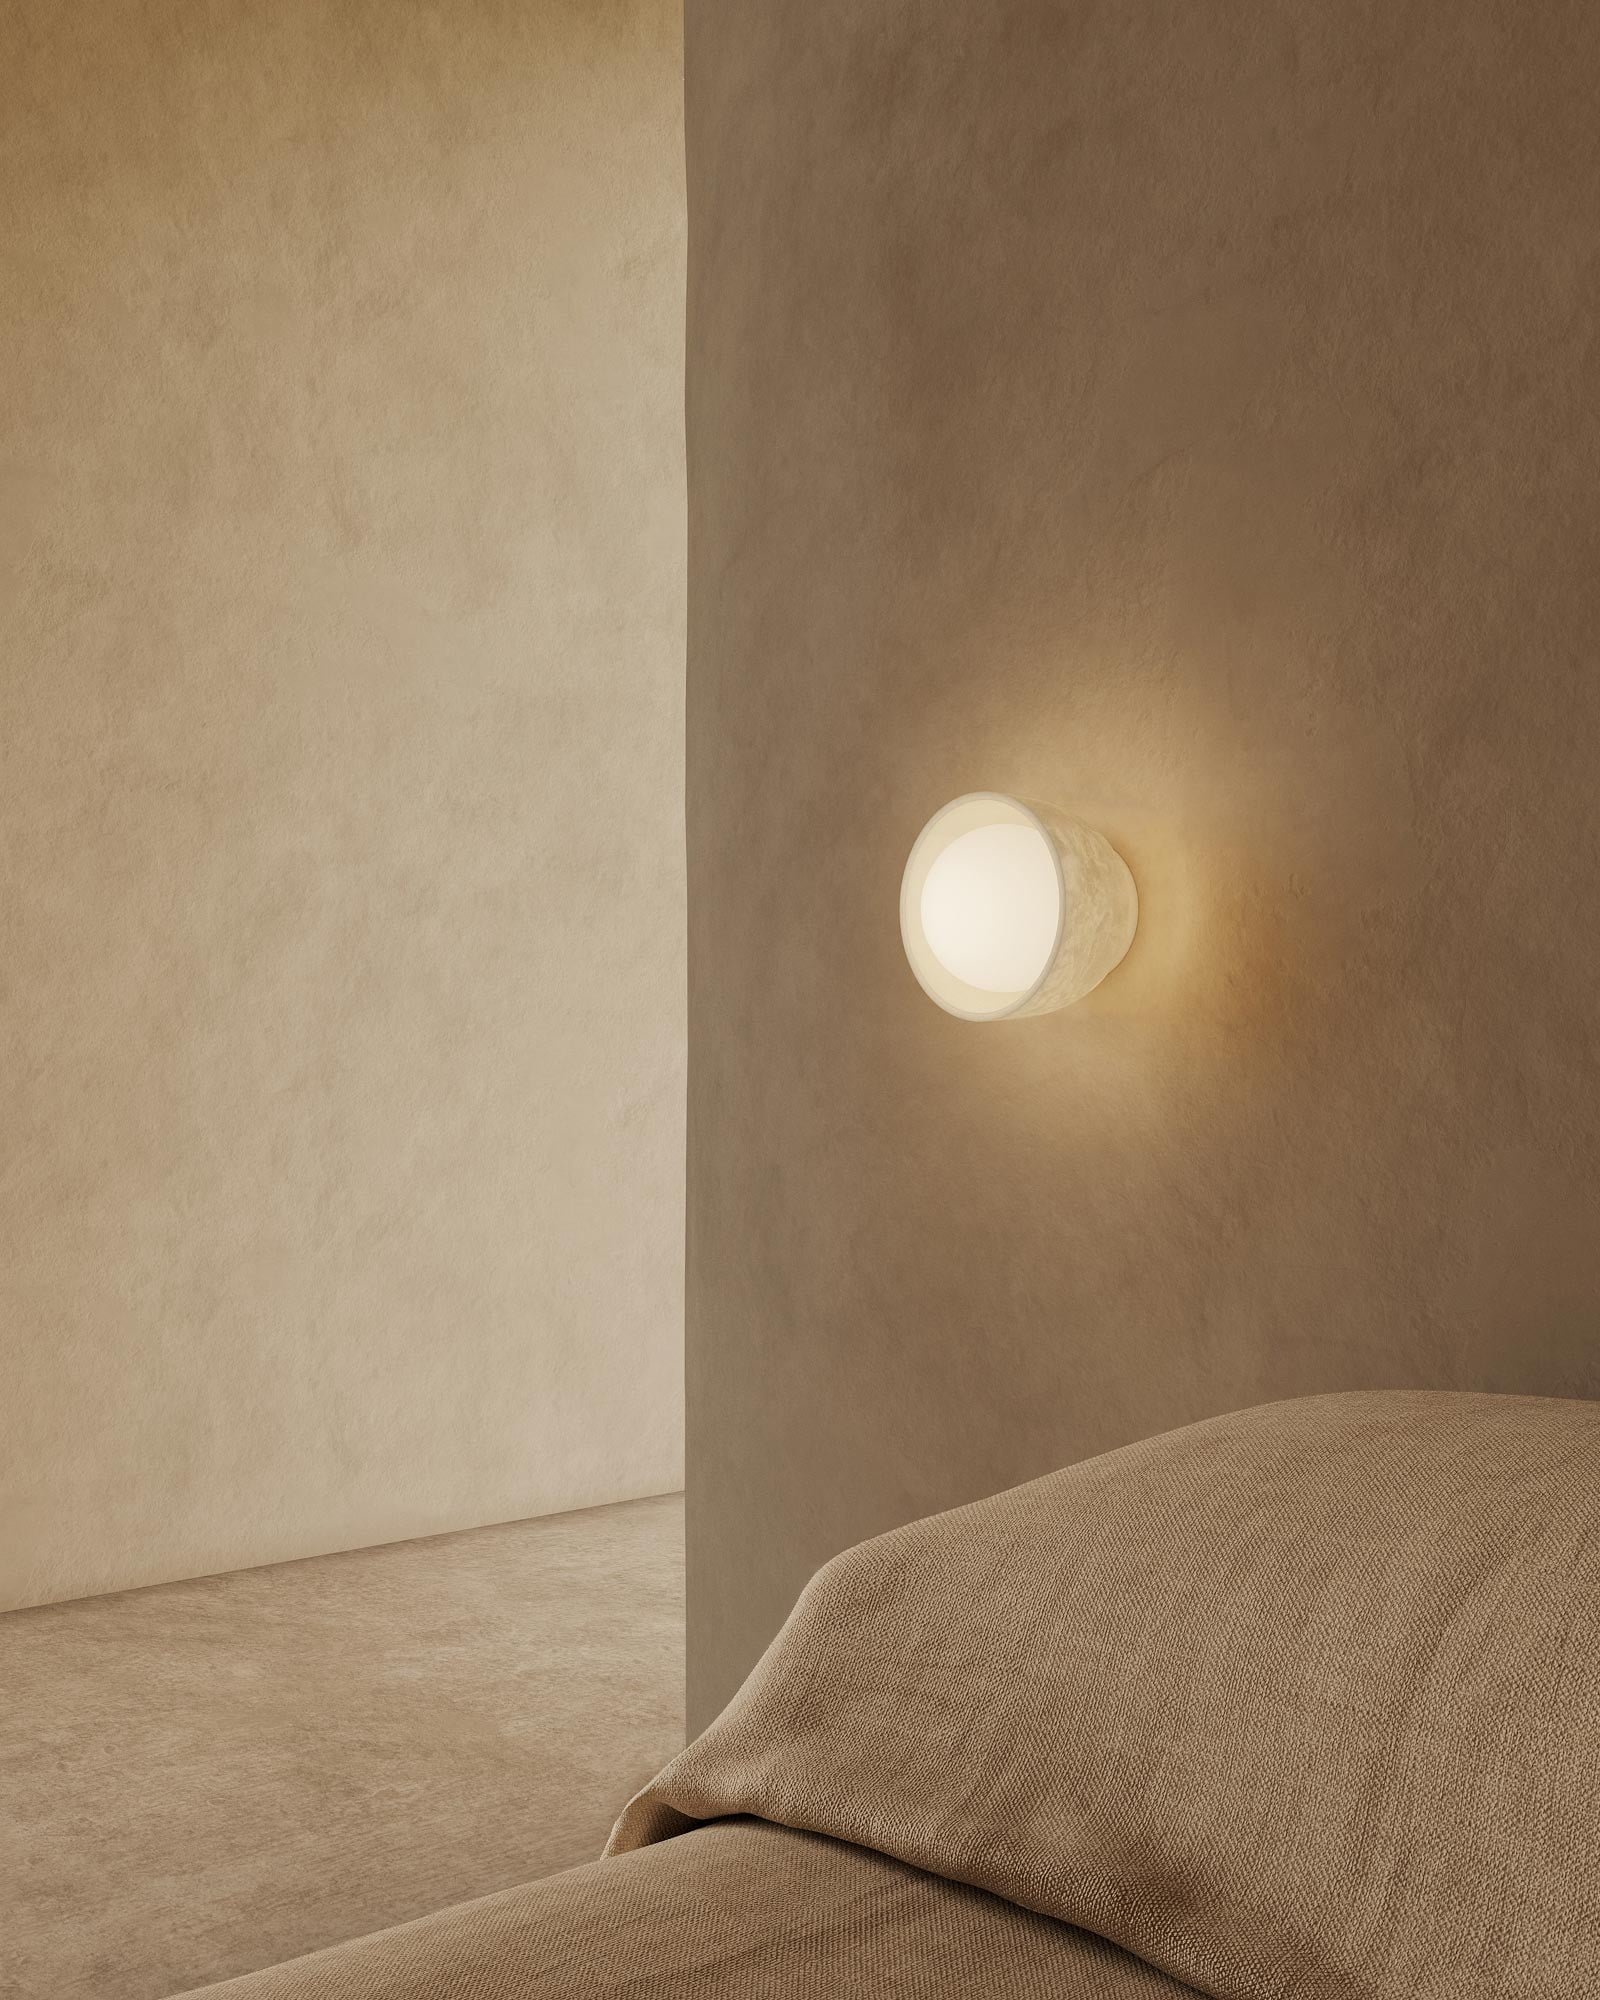 Bedroom wall lamp designed by Bandido Studio